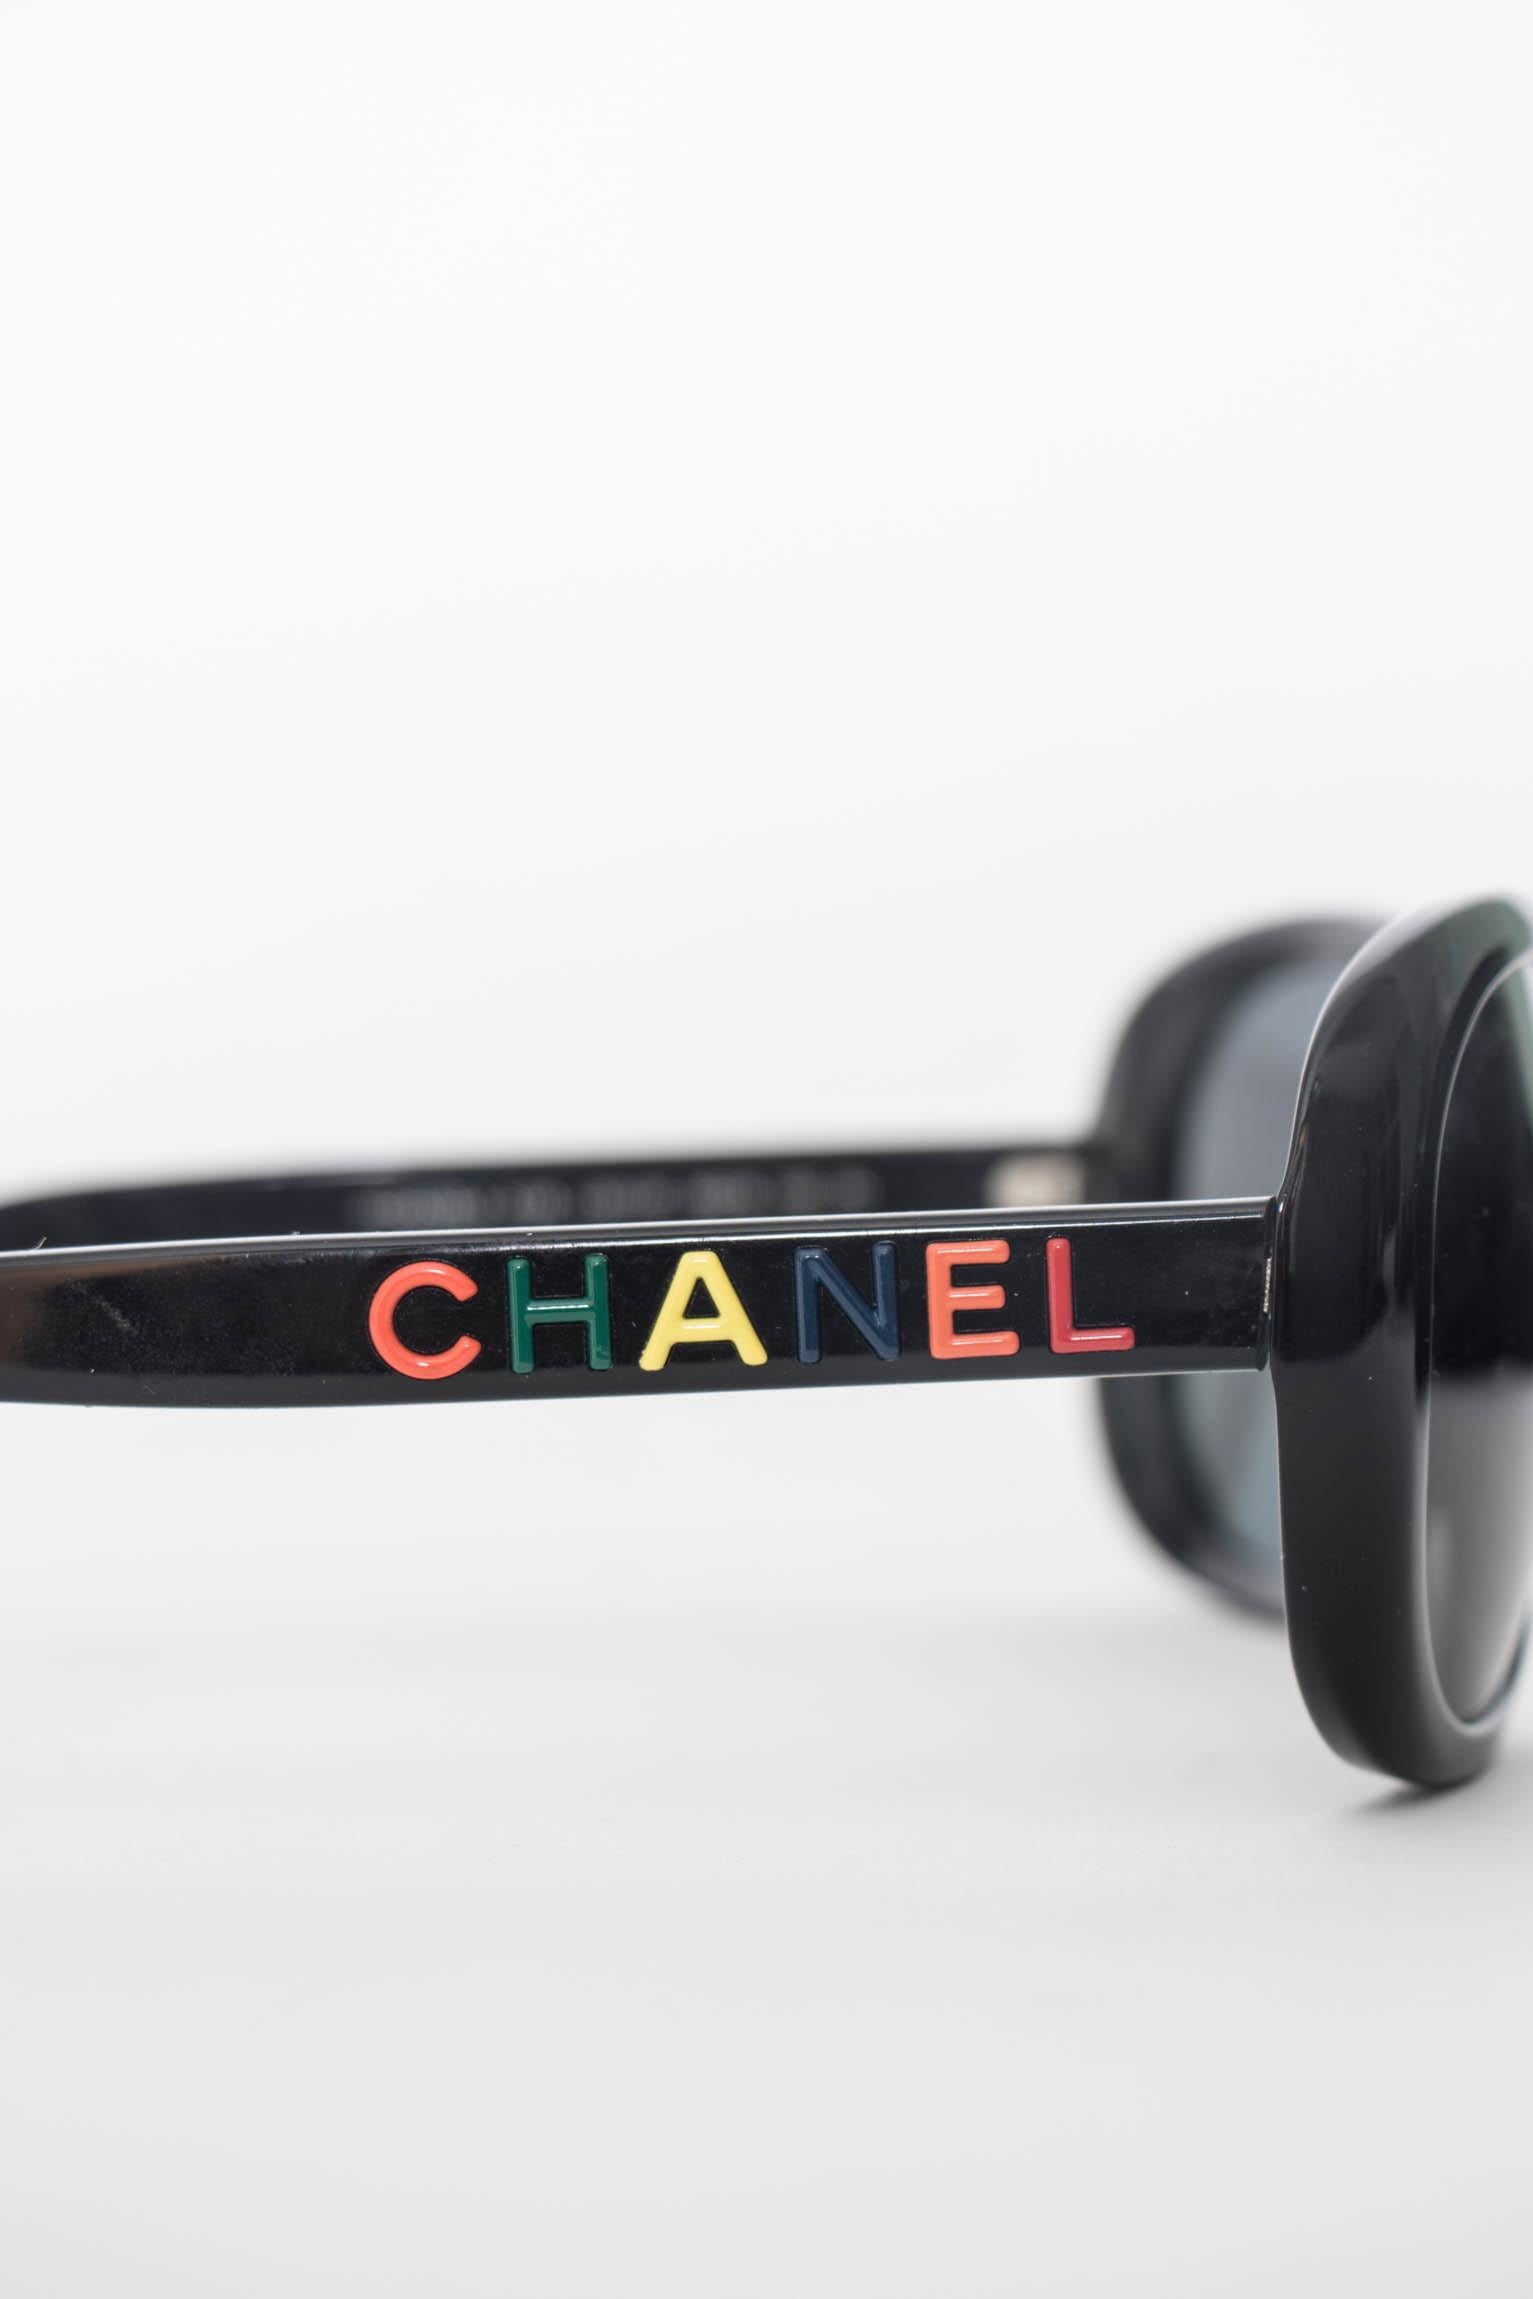 Women's or Men's A Pair of 1990s Vintage Black Chanel Sunglasses